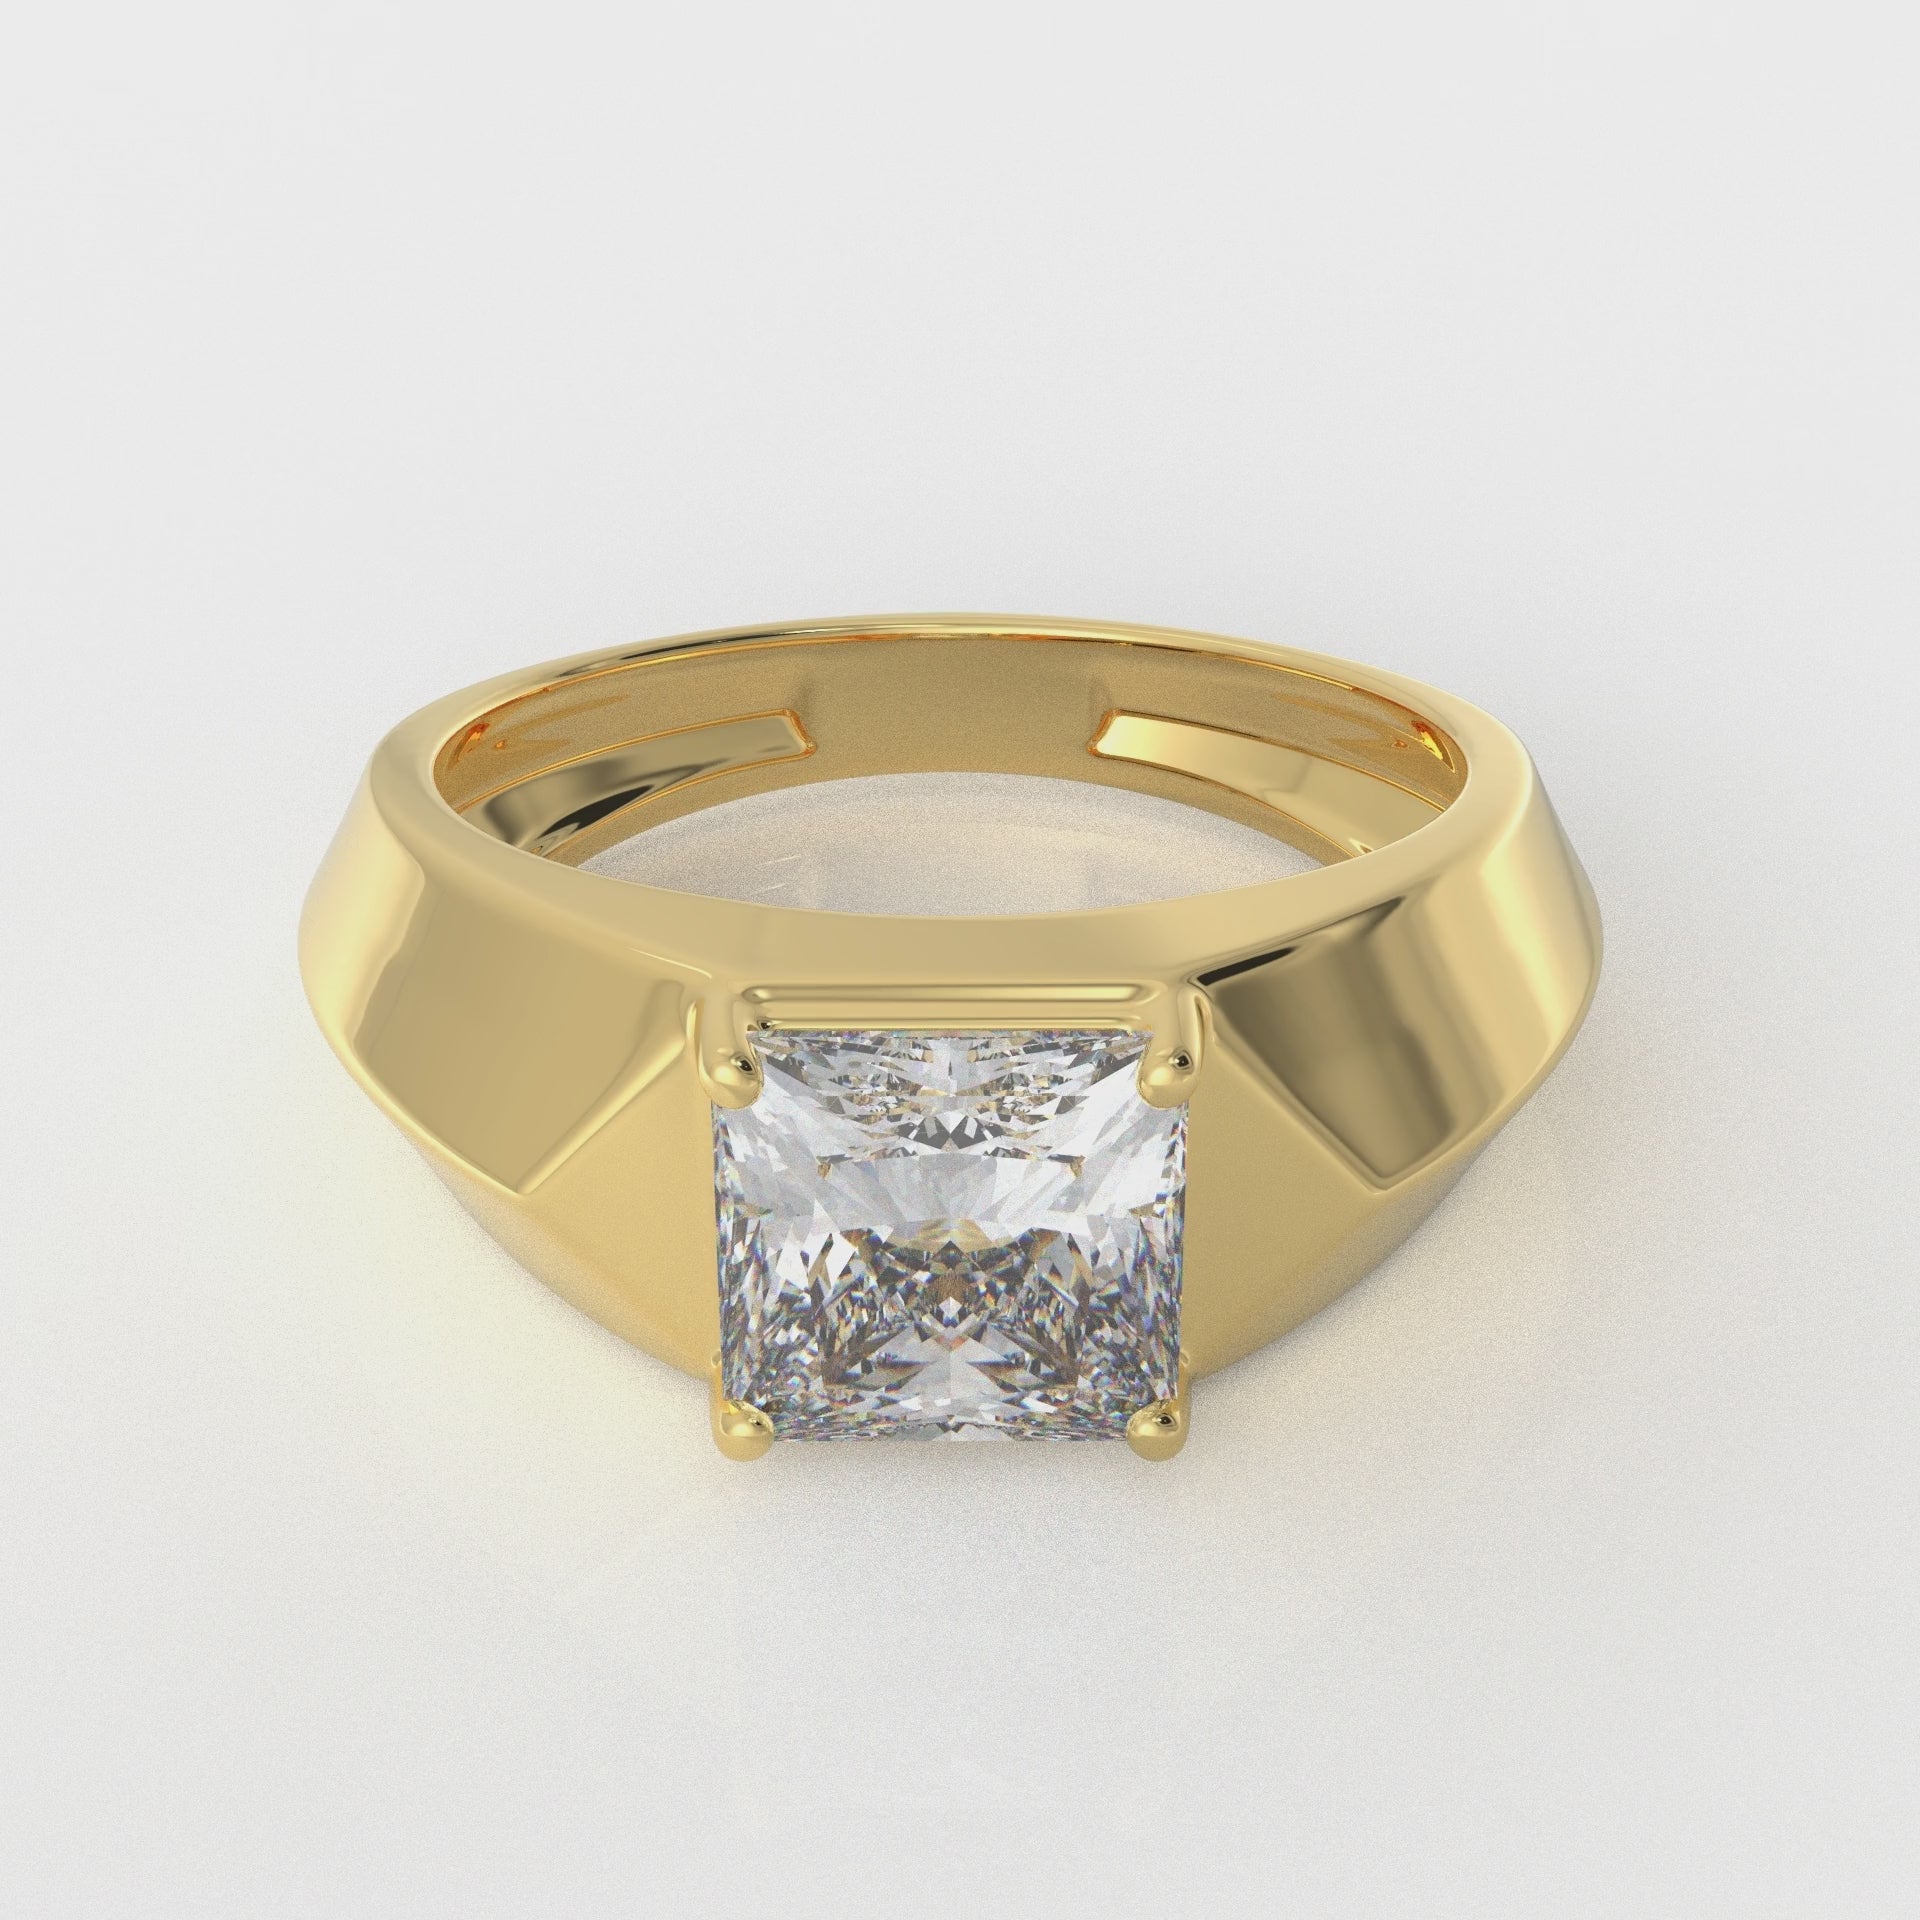 Mens Square Ring Solid 14k Yellow Gold Classic Design Diamond Cut Brushed  Finish Genuine 14MM Size 12 - Walmart.com